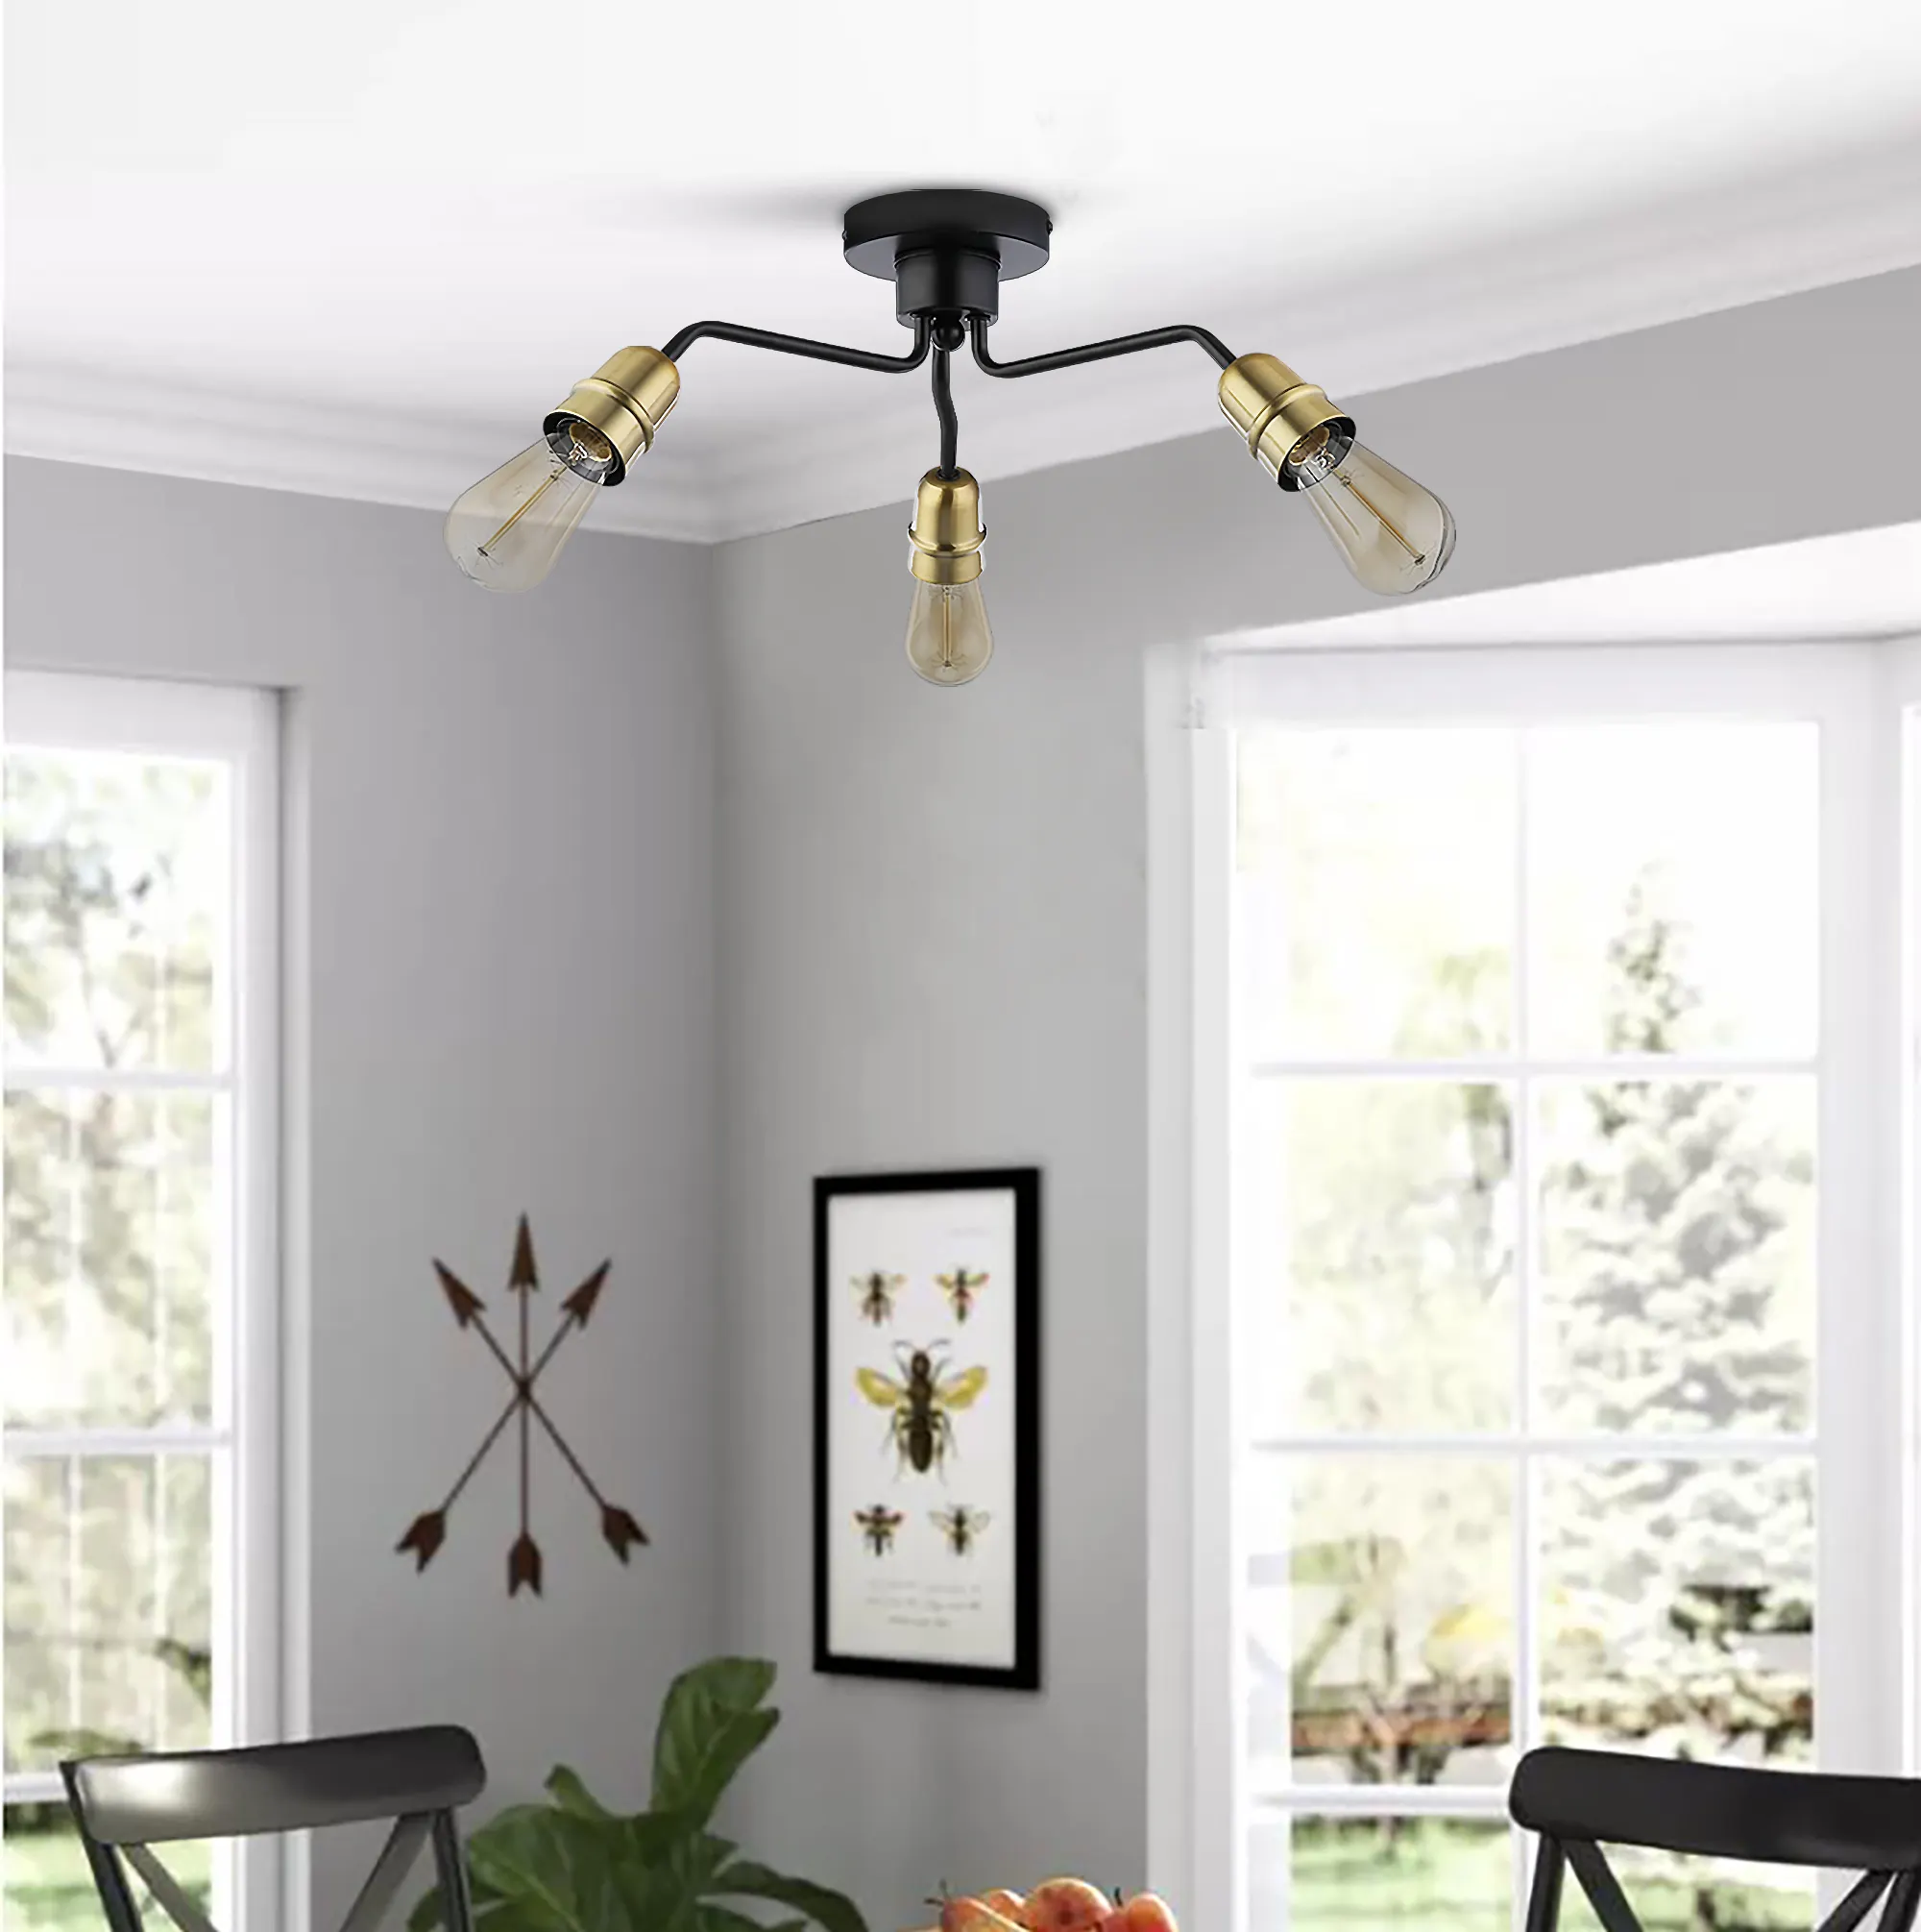 Light for Home Decor Lamparas De Techo Adjustable Holder Flush Mount Ceiling Light Modern Pendant Lamp Chandelier Light Fixtures